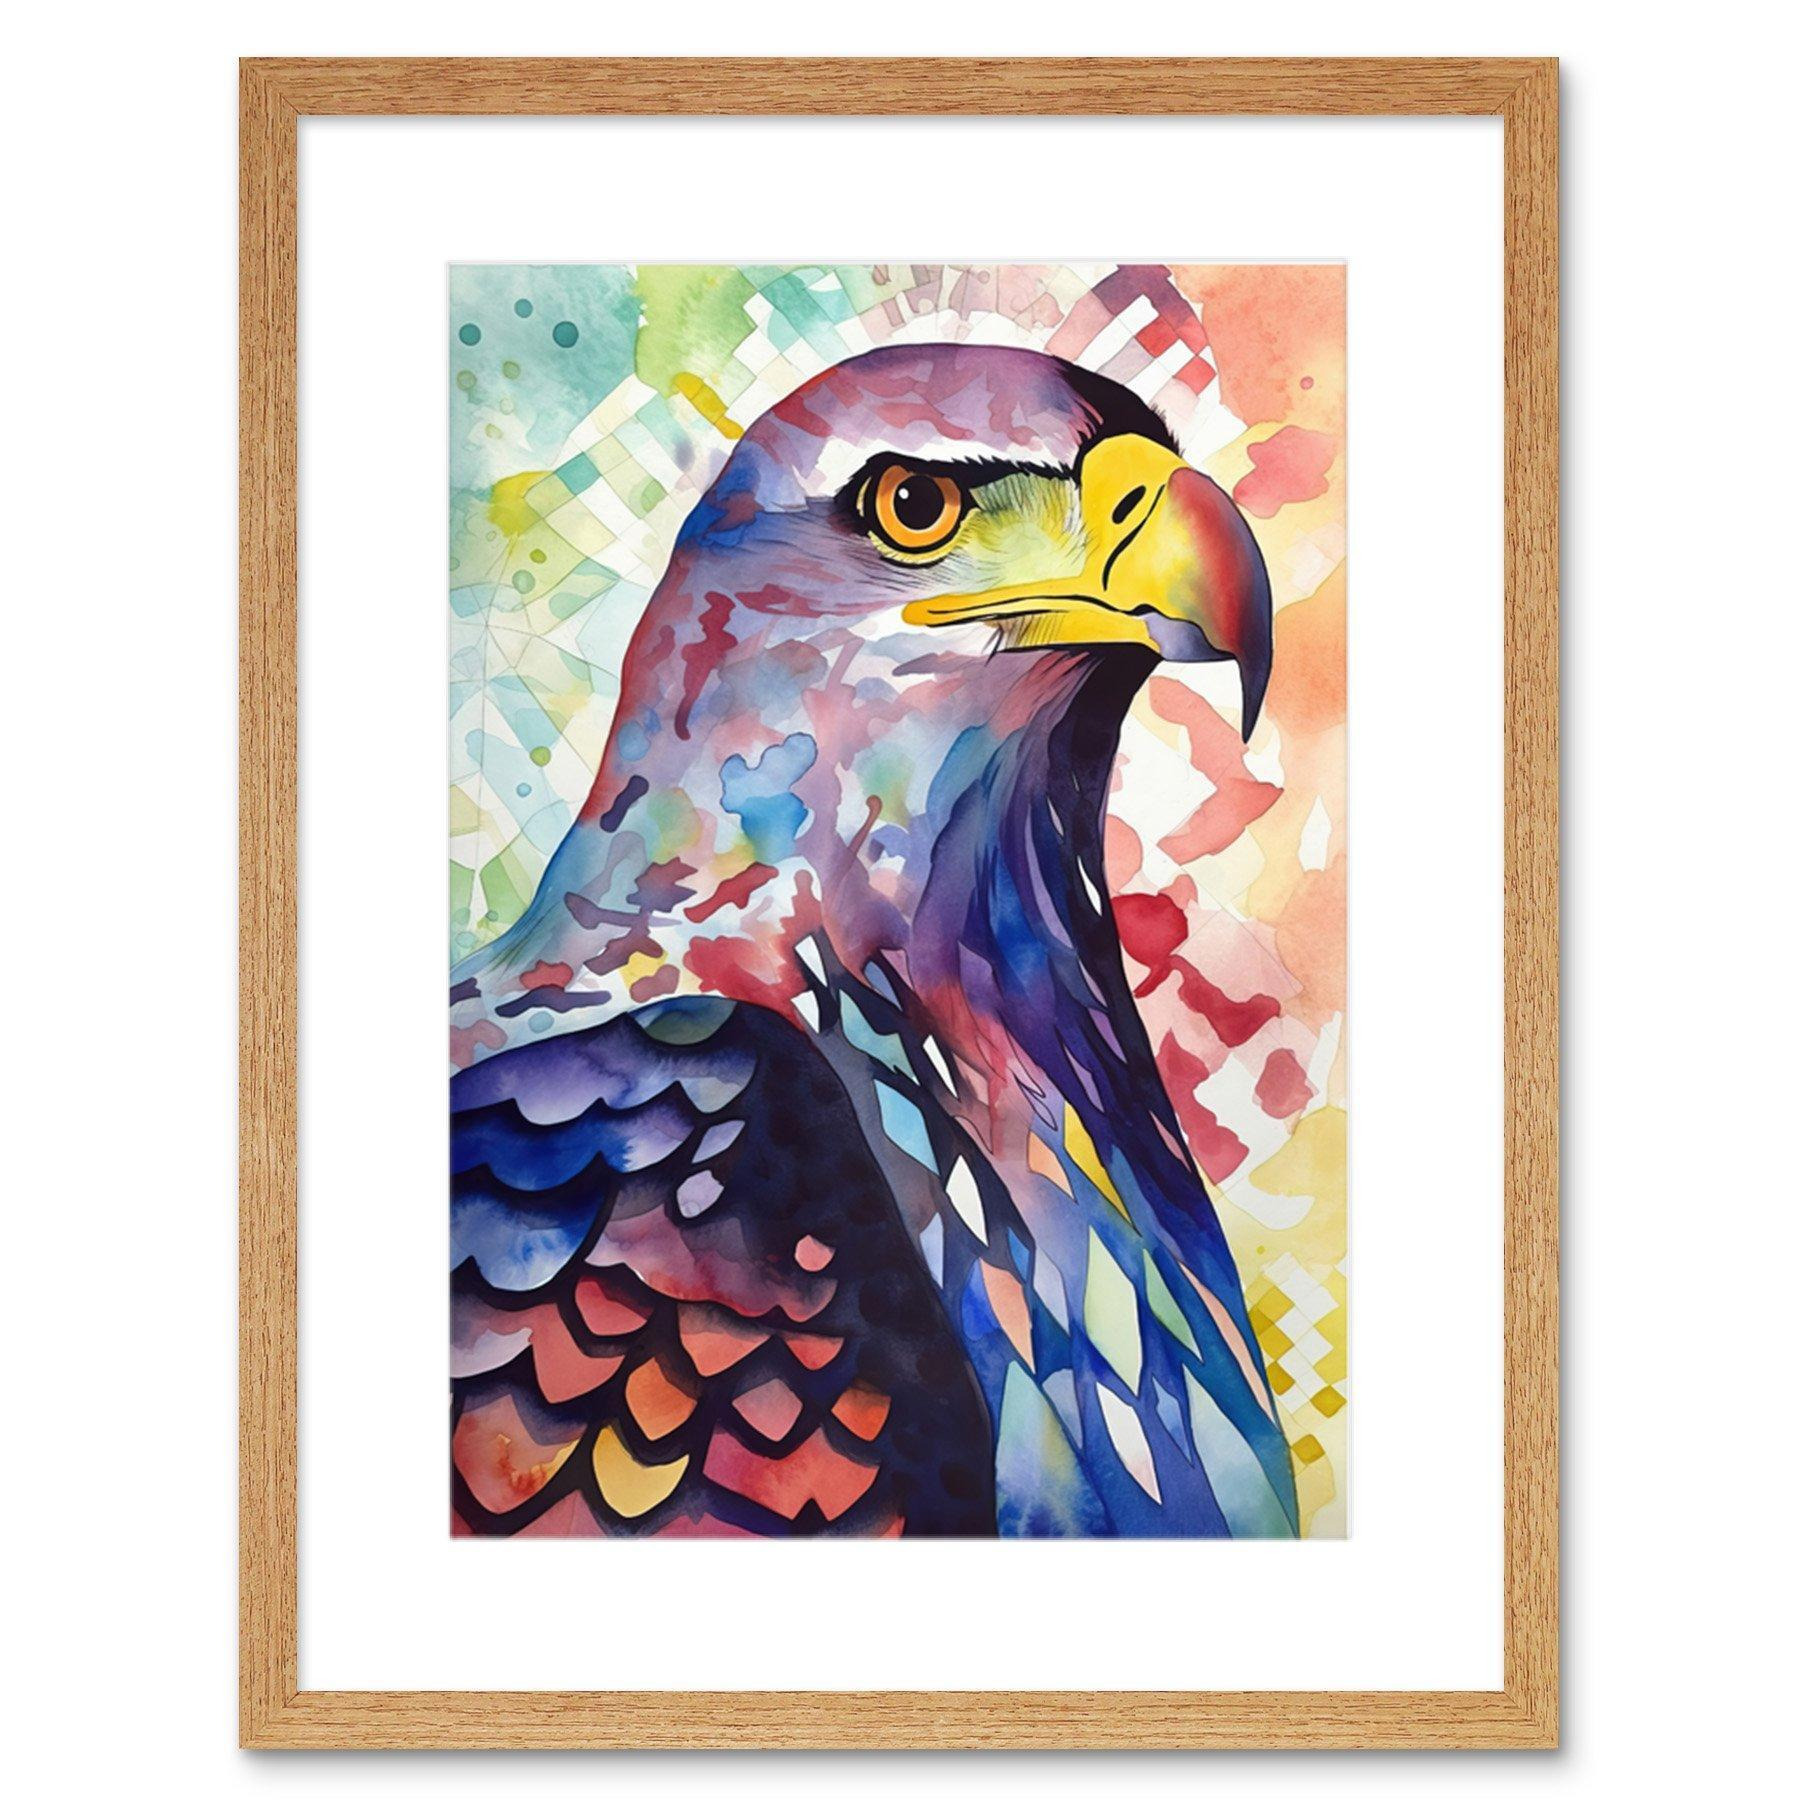 Bald Eagle Bird Folk Art Multicoloured Watercolour Painting Artwork Framed Print Wall Art 9X7 Inch - image 1